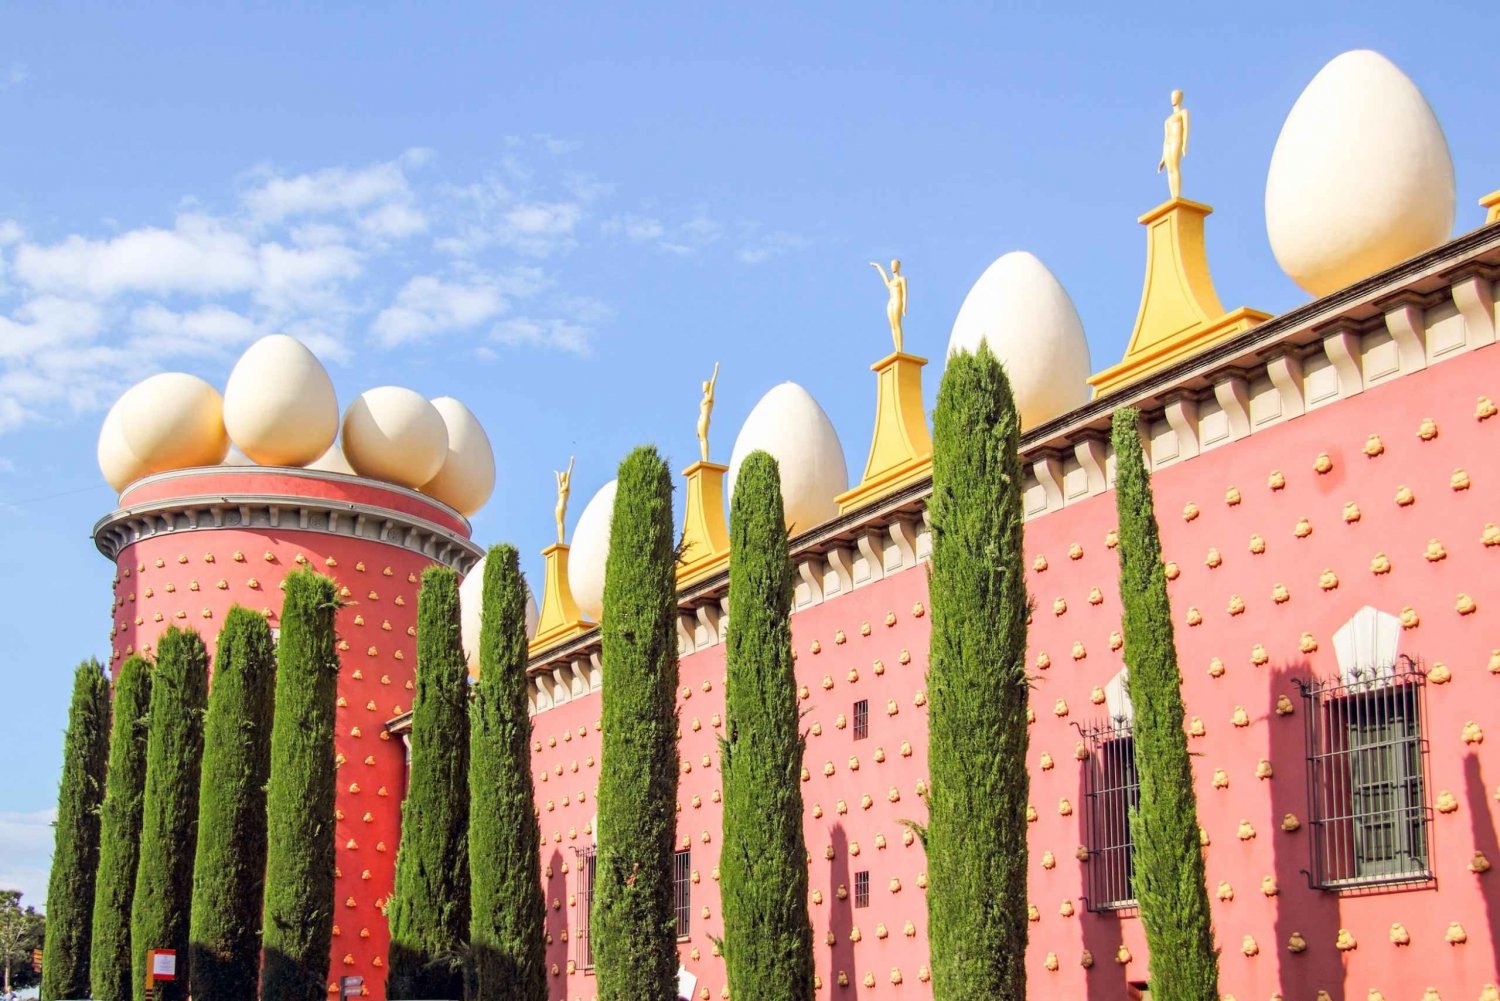 Vanuit Barcelona: dagtrip Girona, Figueres en Dalí Museum